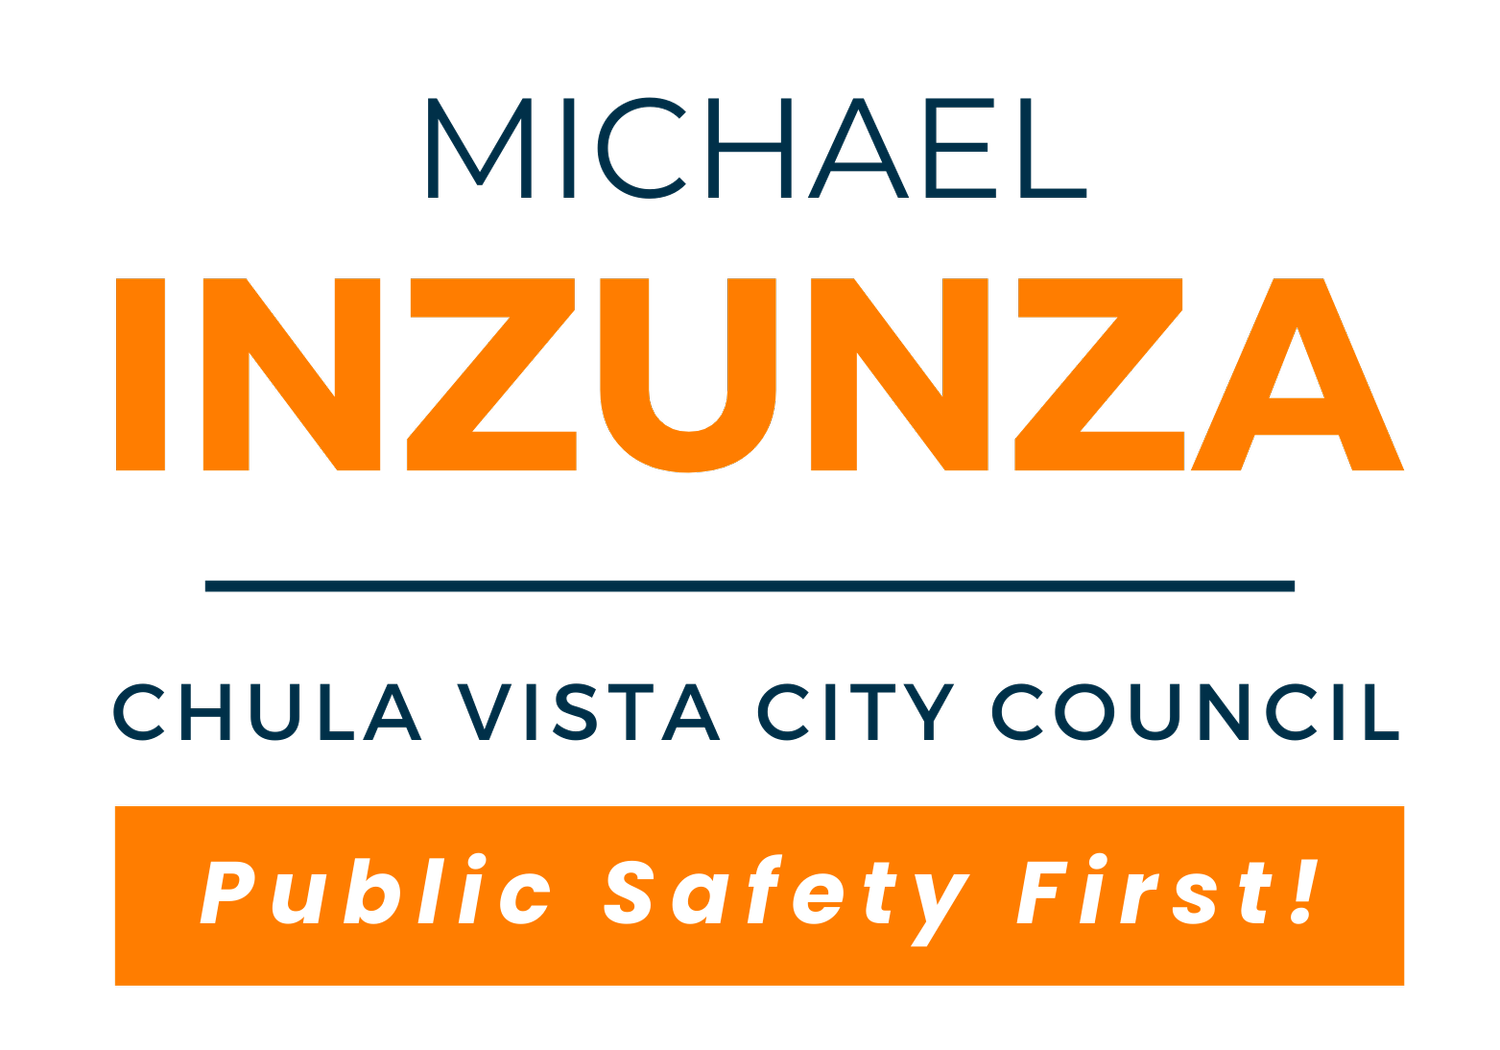 Michael Inzunza for Chula Vista City Council